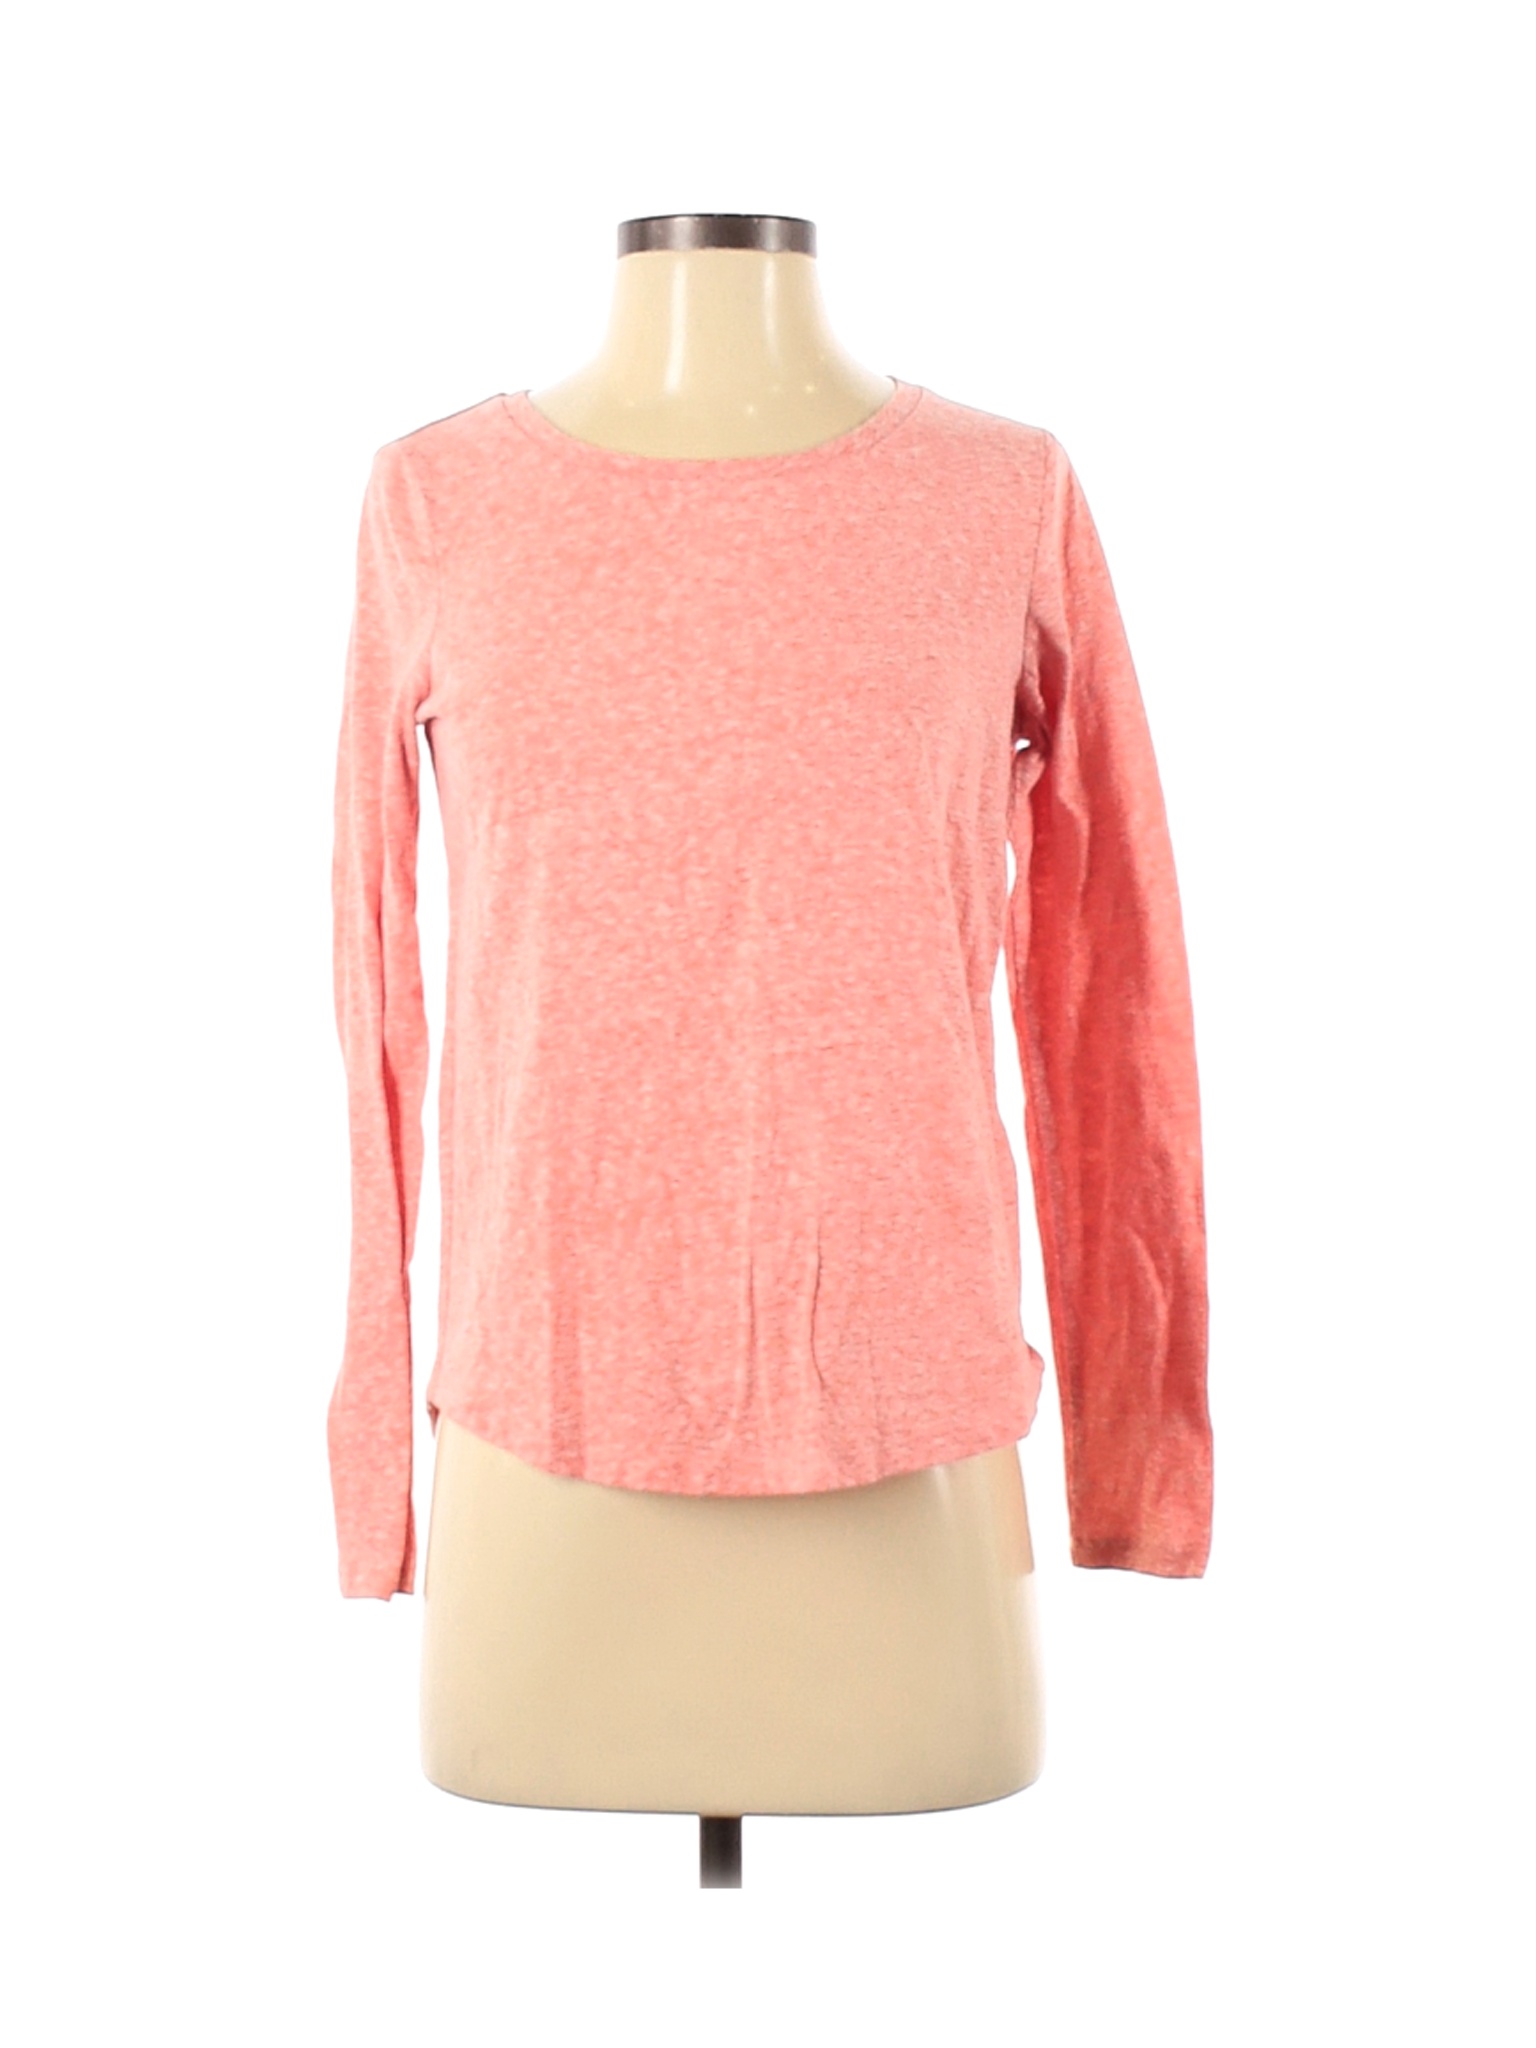 Gap Women Pink Long Sleeve T-Shirt XS | eBay